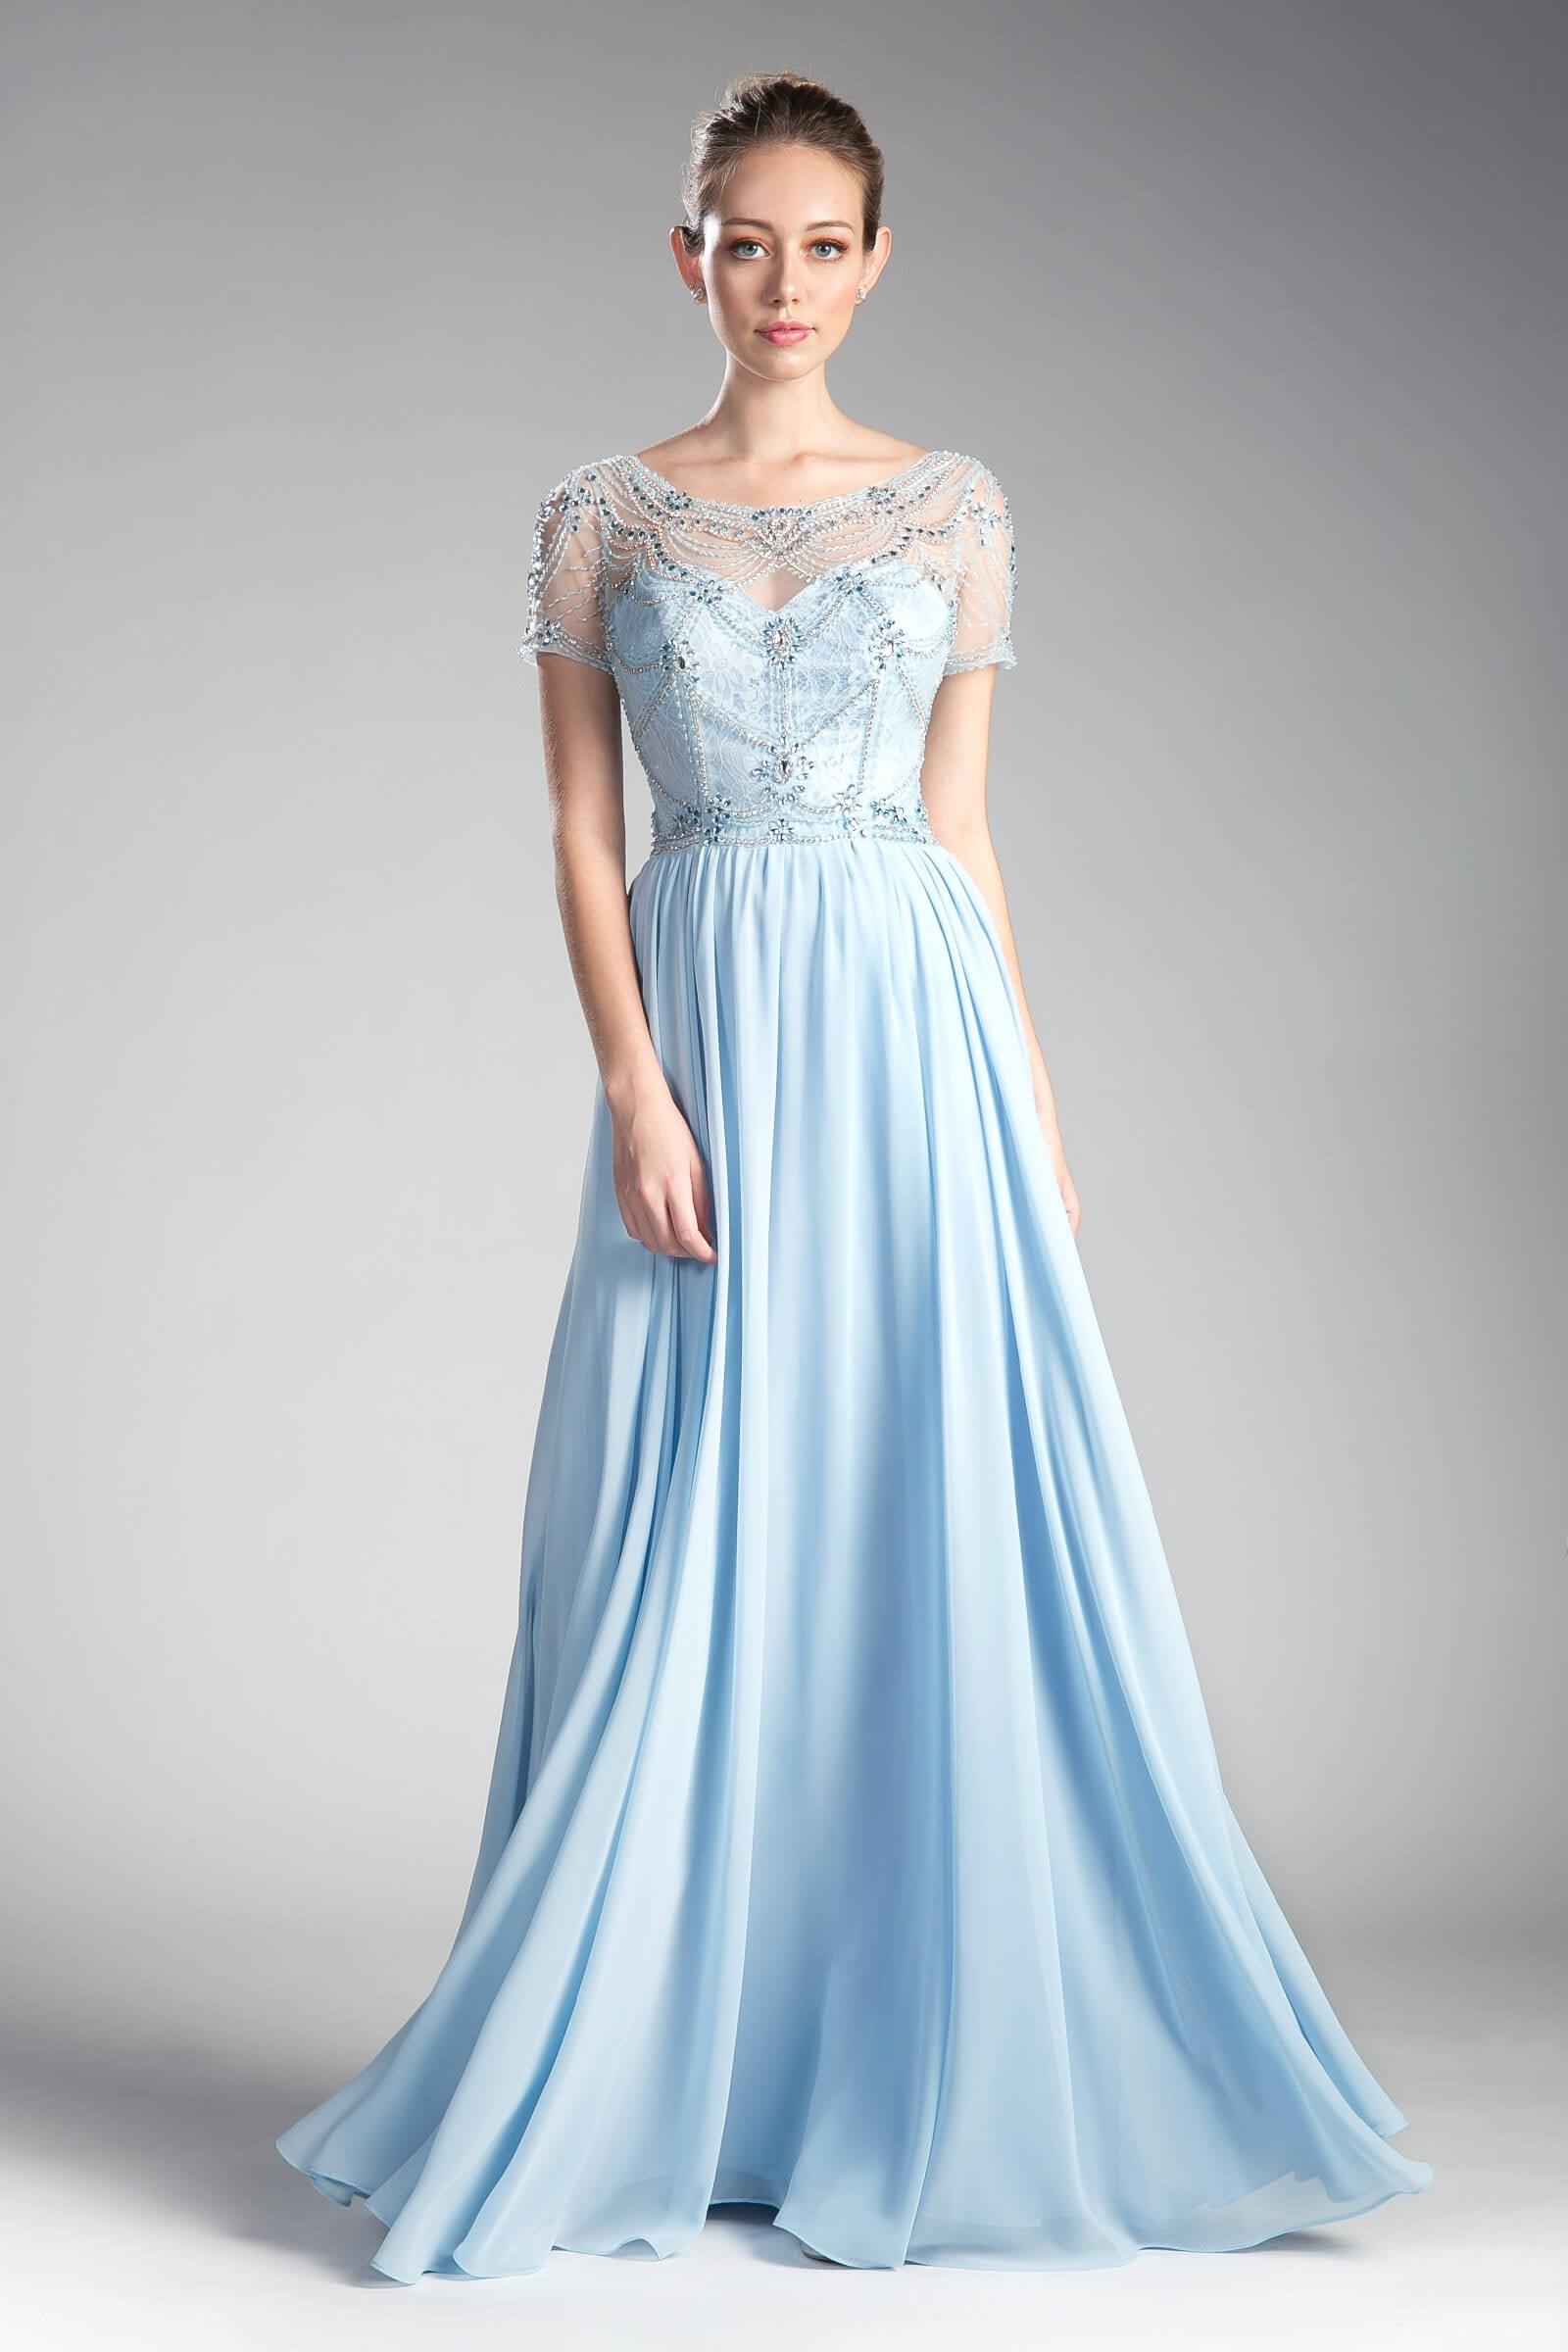 Cinderella Divine CD0123 Long Dress Formal Evening Gown for $68.99 ...